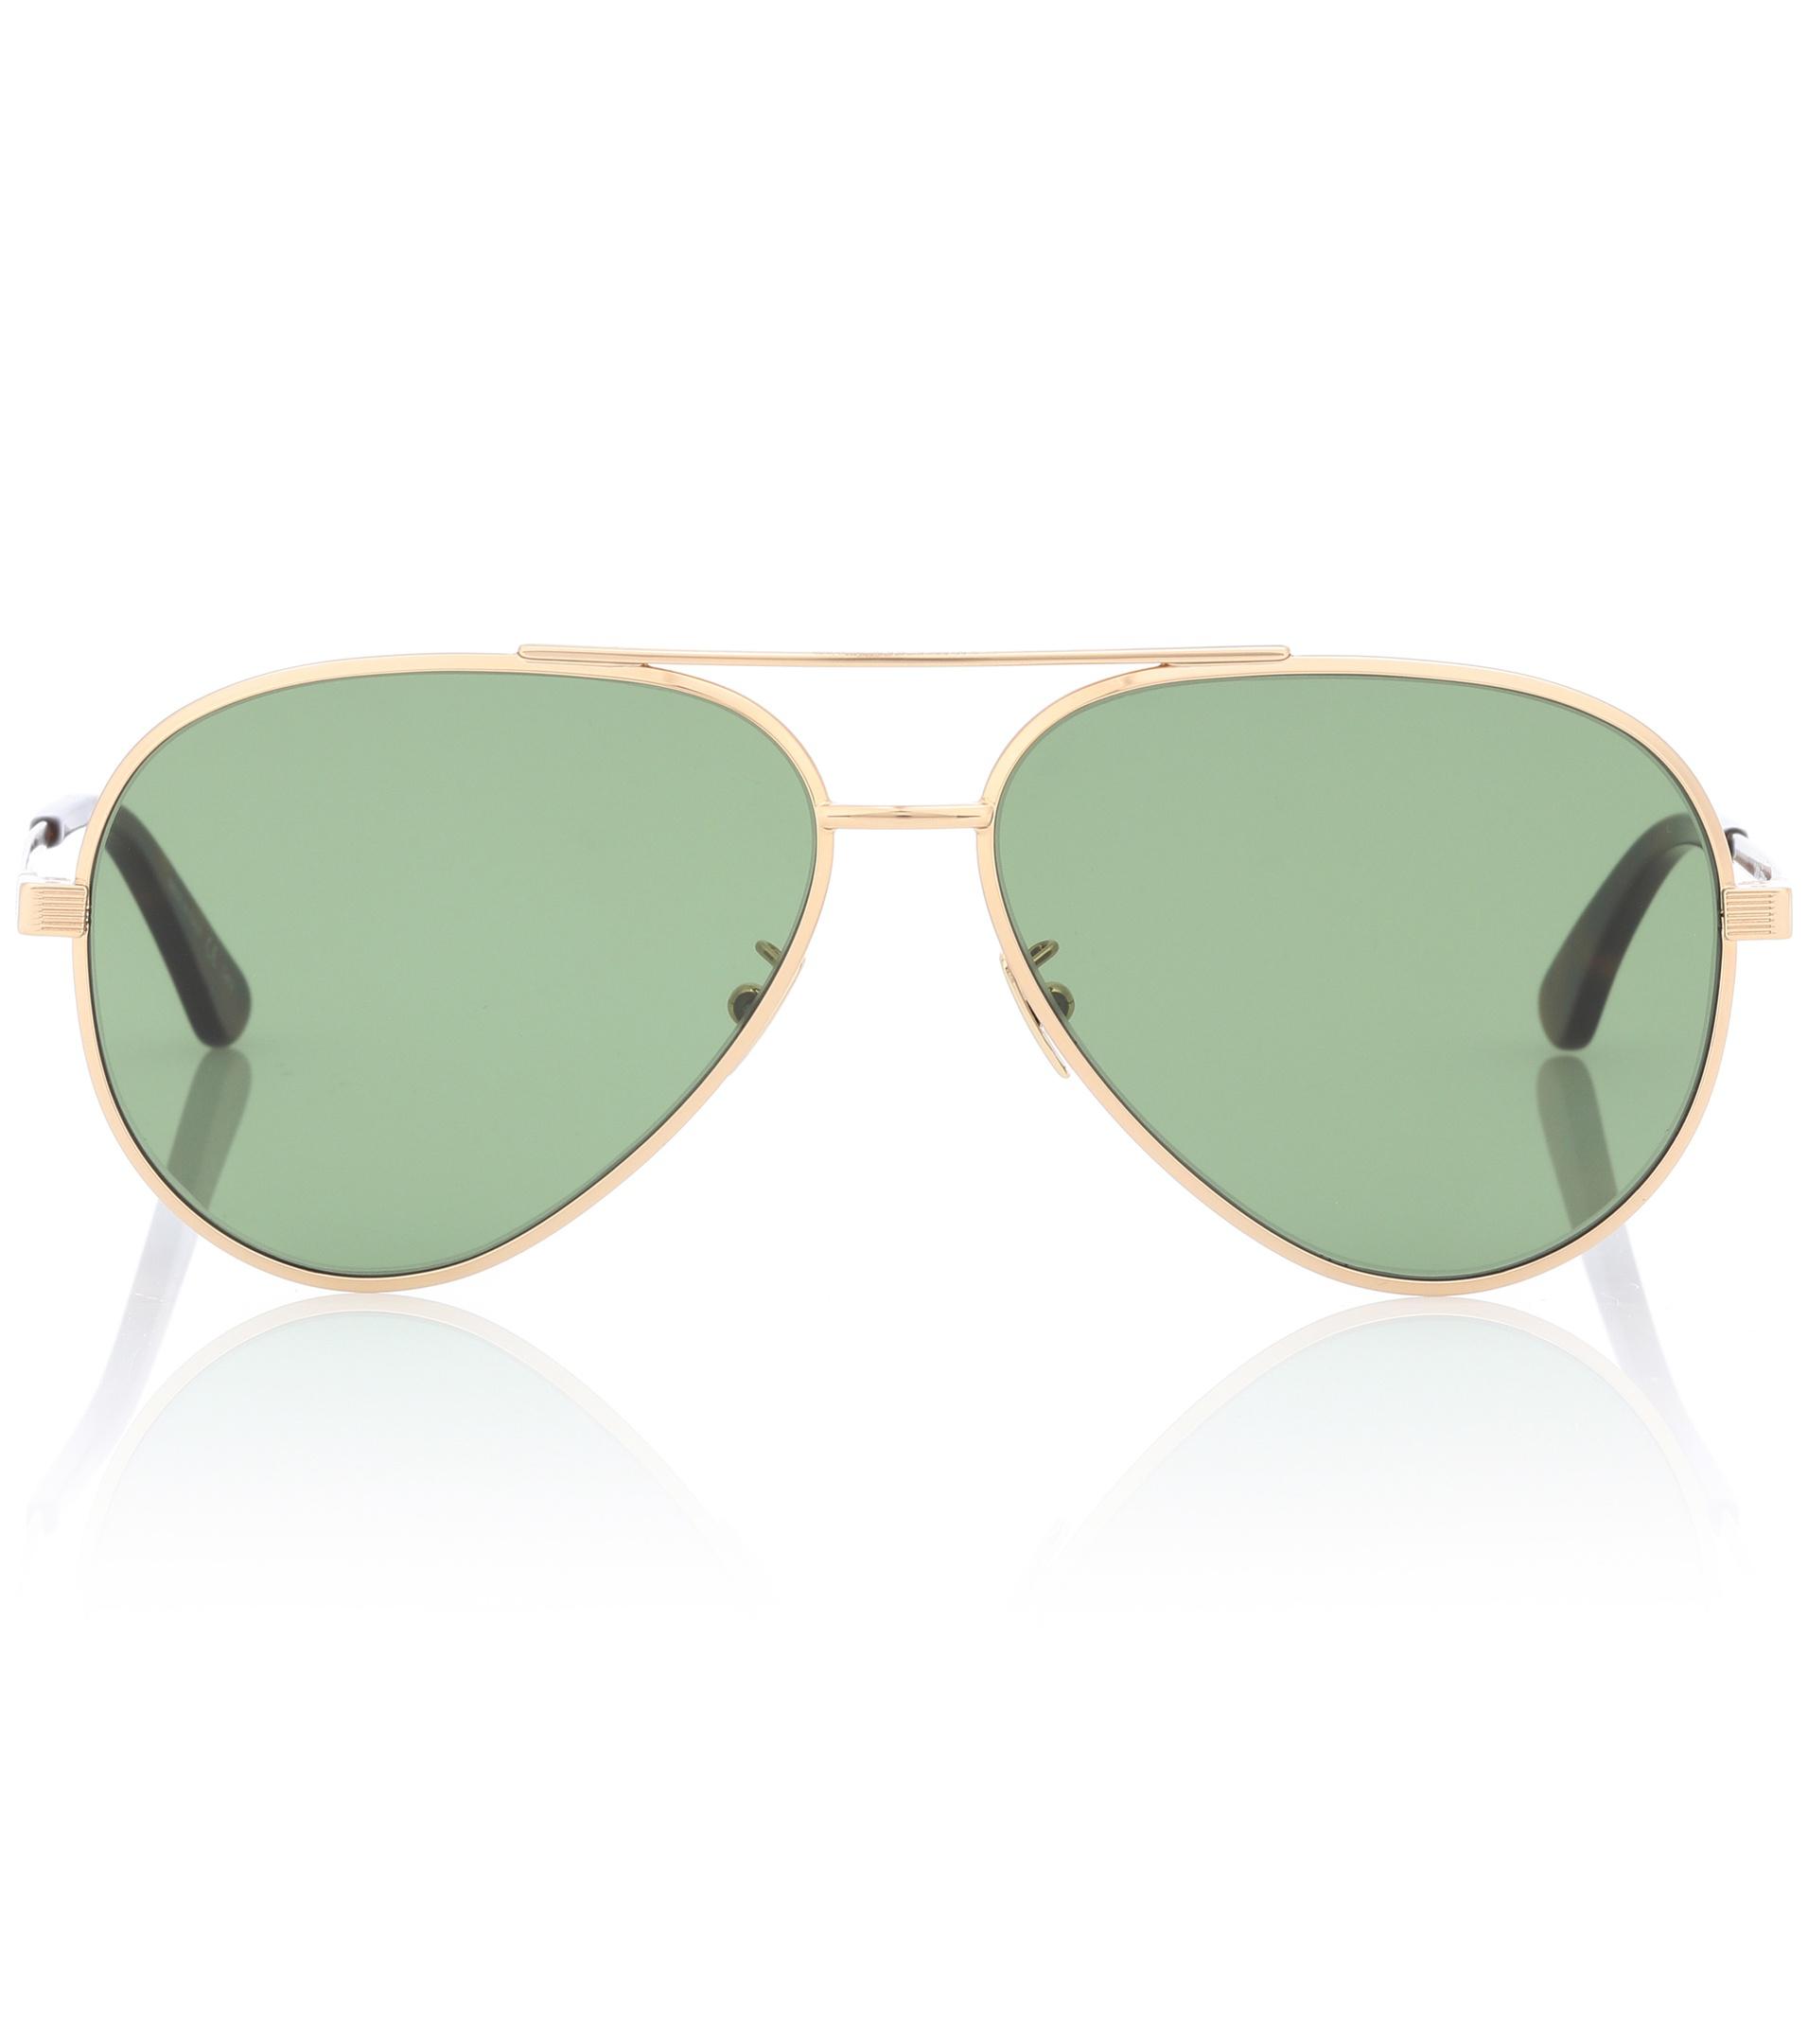 Saint Laurent Synthetic Classic 11 Zero Aviator Sunglasses in Green - Lyst